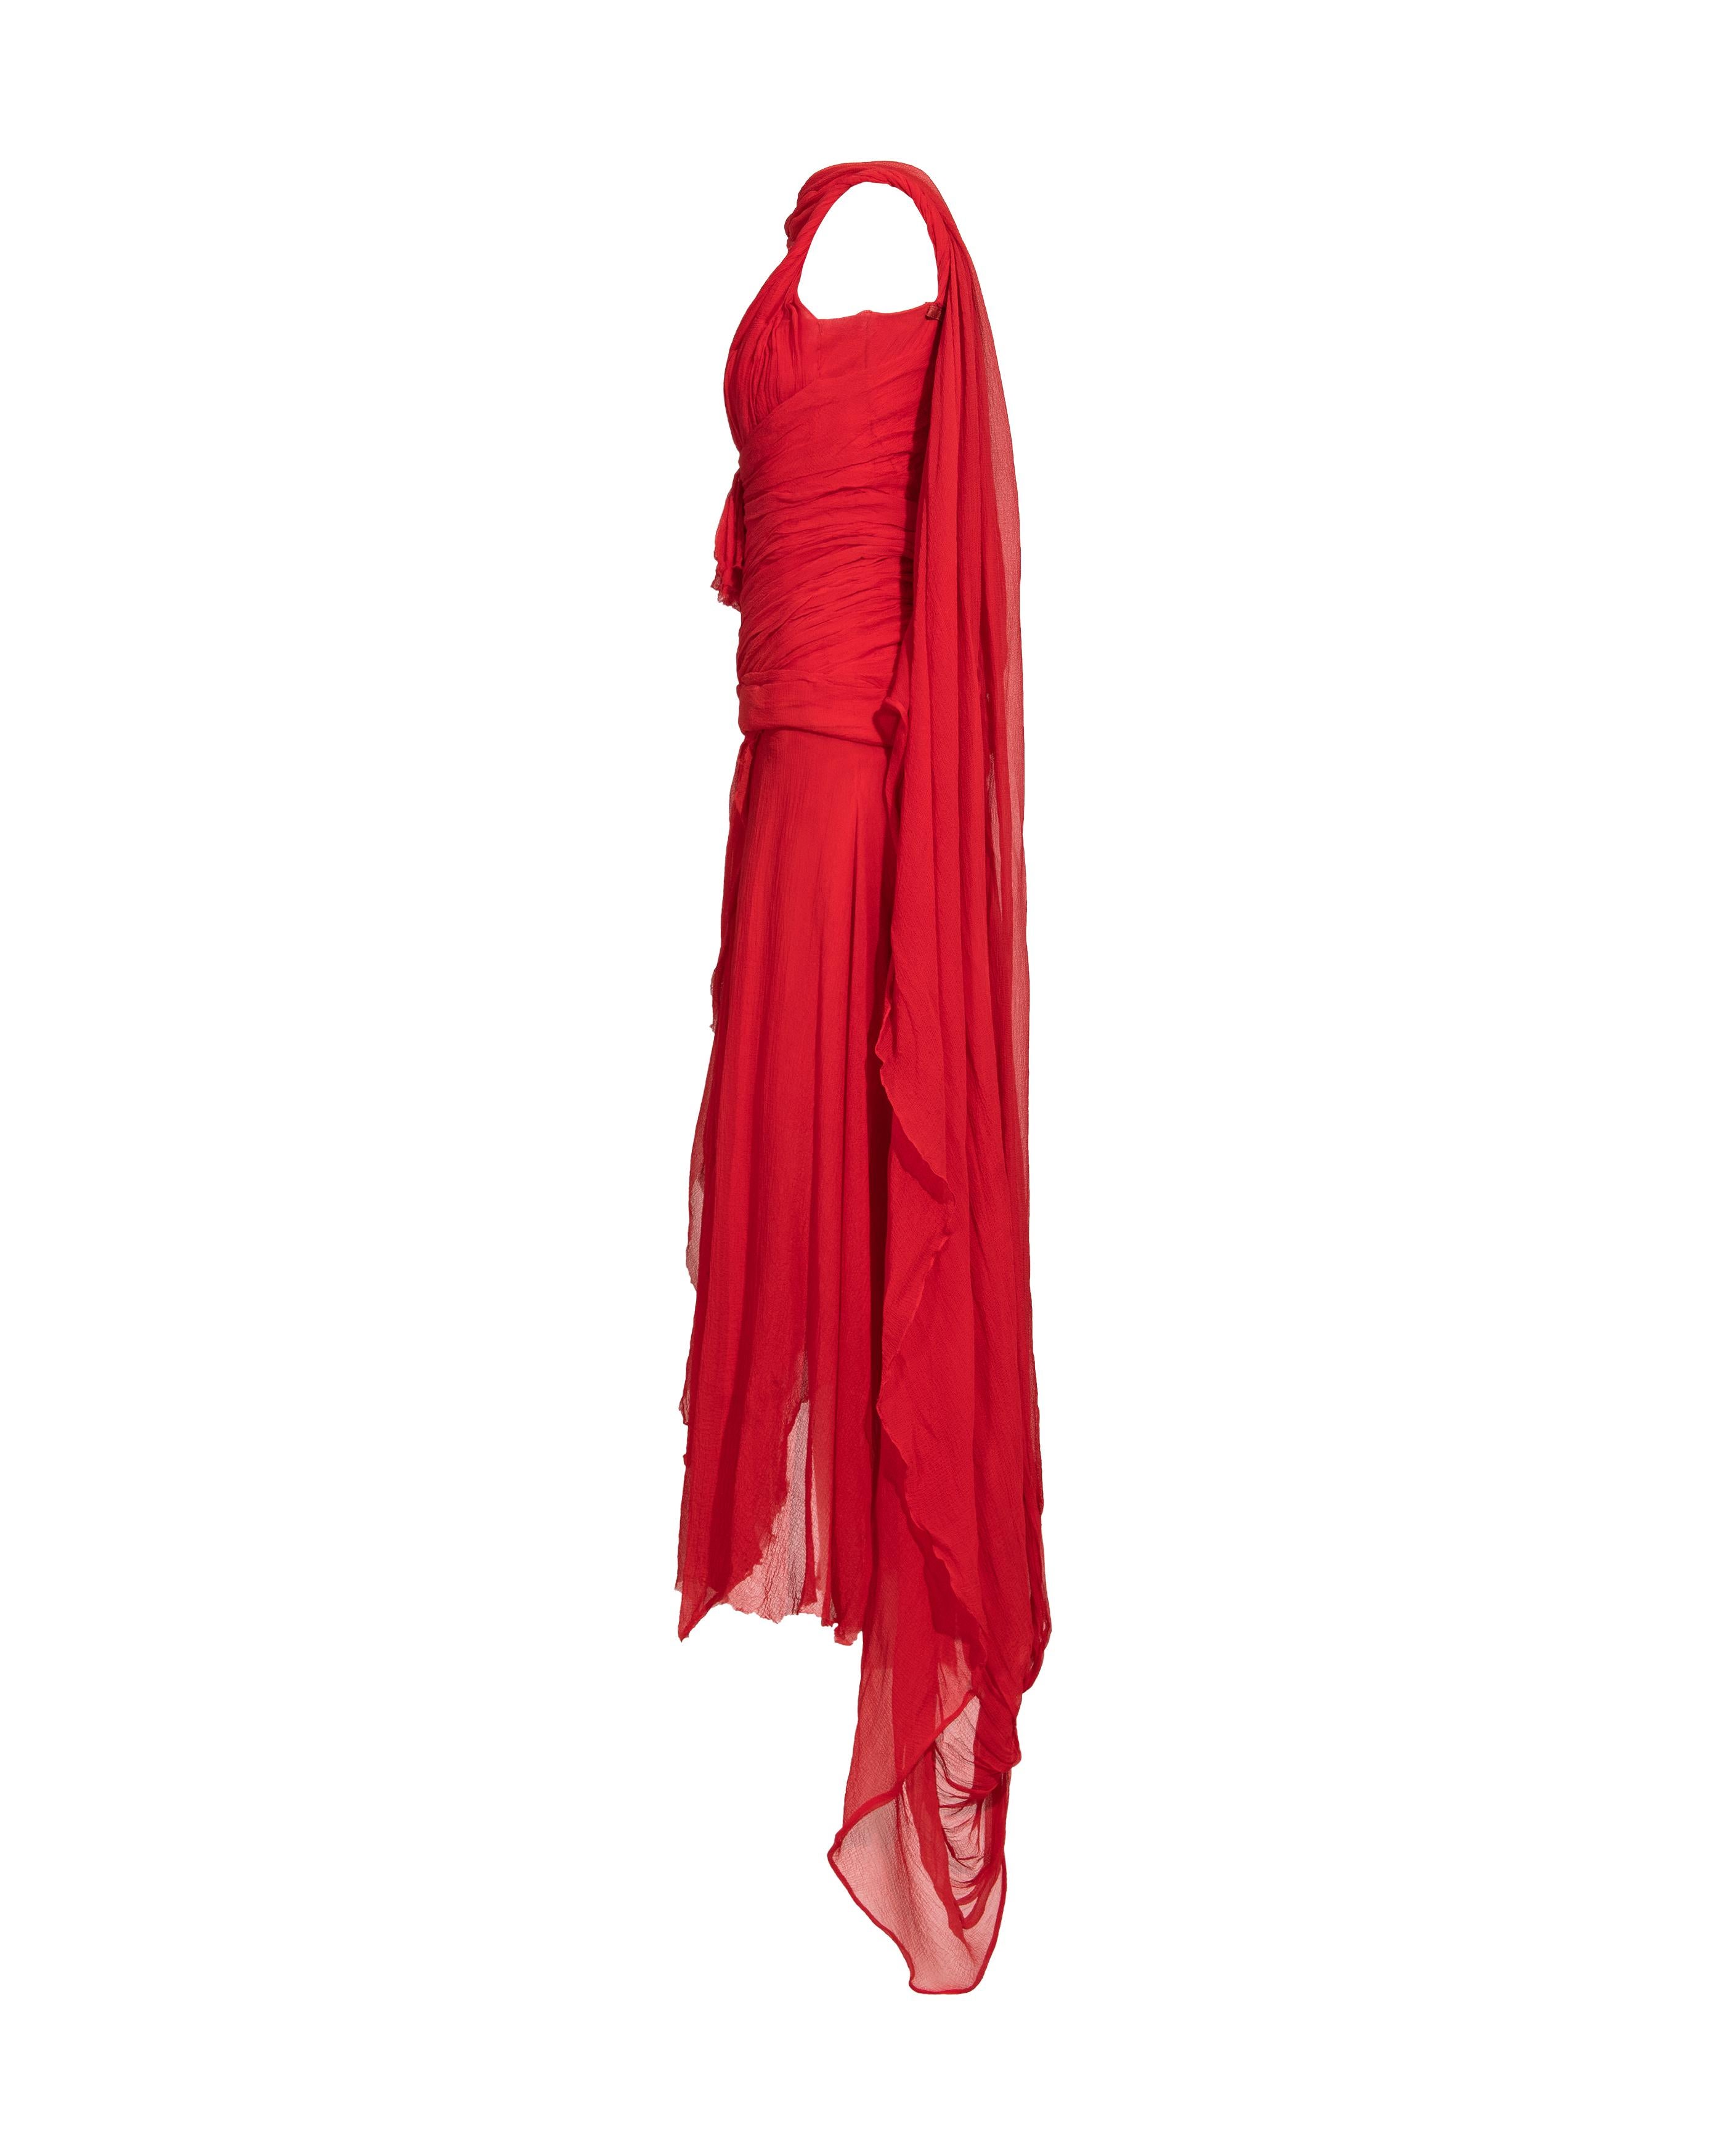 S/S 2003 Alexander McQueen  The Collective Robe en mousseline de soie rouge avec ceinture 1